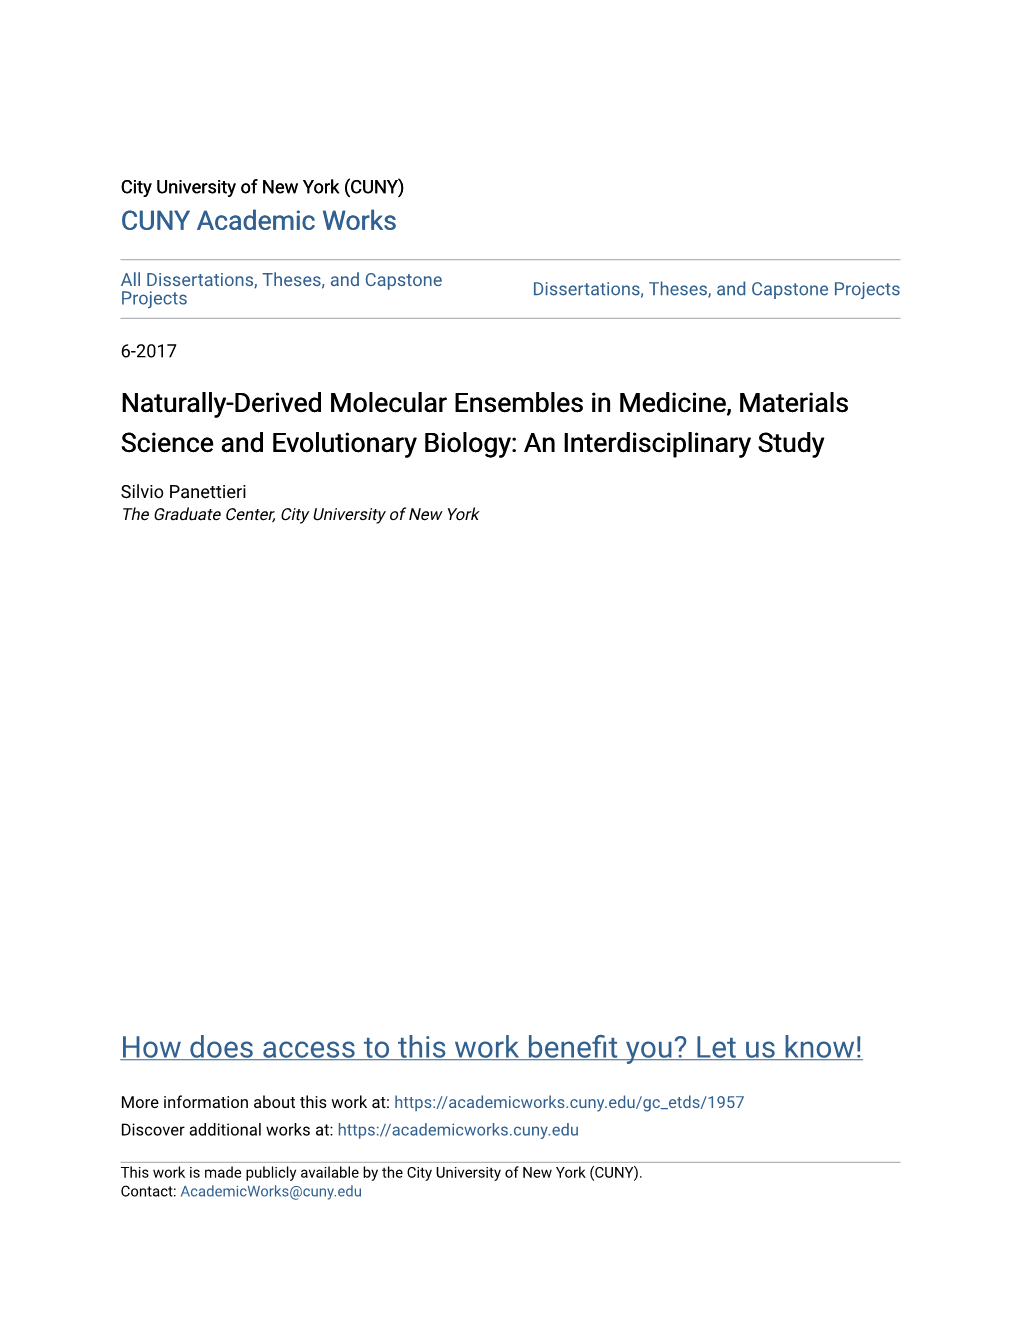 Naturally-Derived Molecular Ensembles in Medicine, Materials Science and Evolutionary Biology: an Interdisciplinary Study